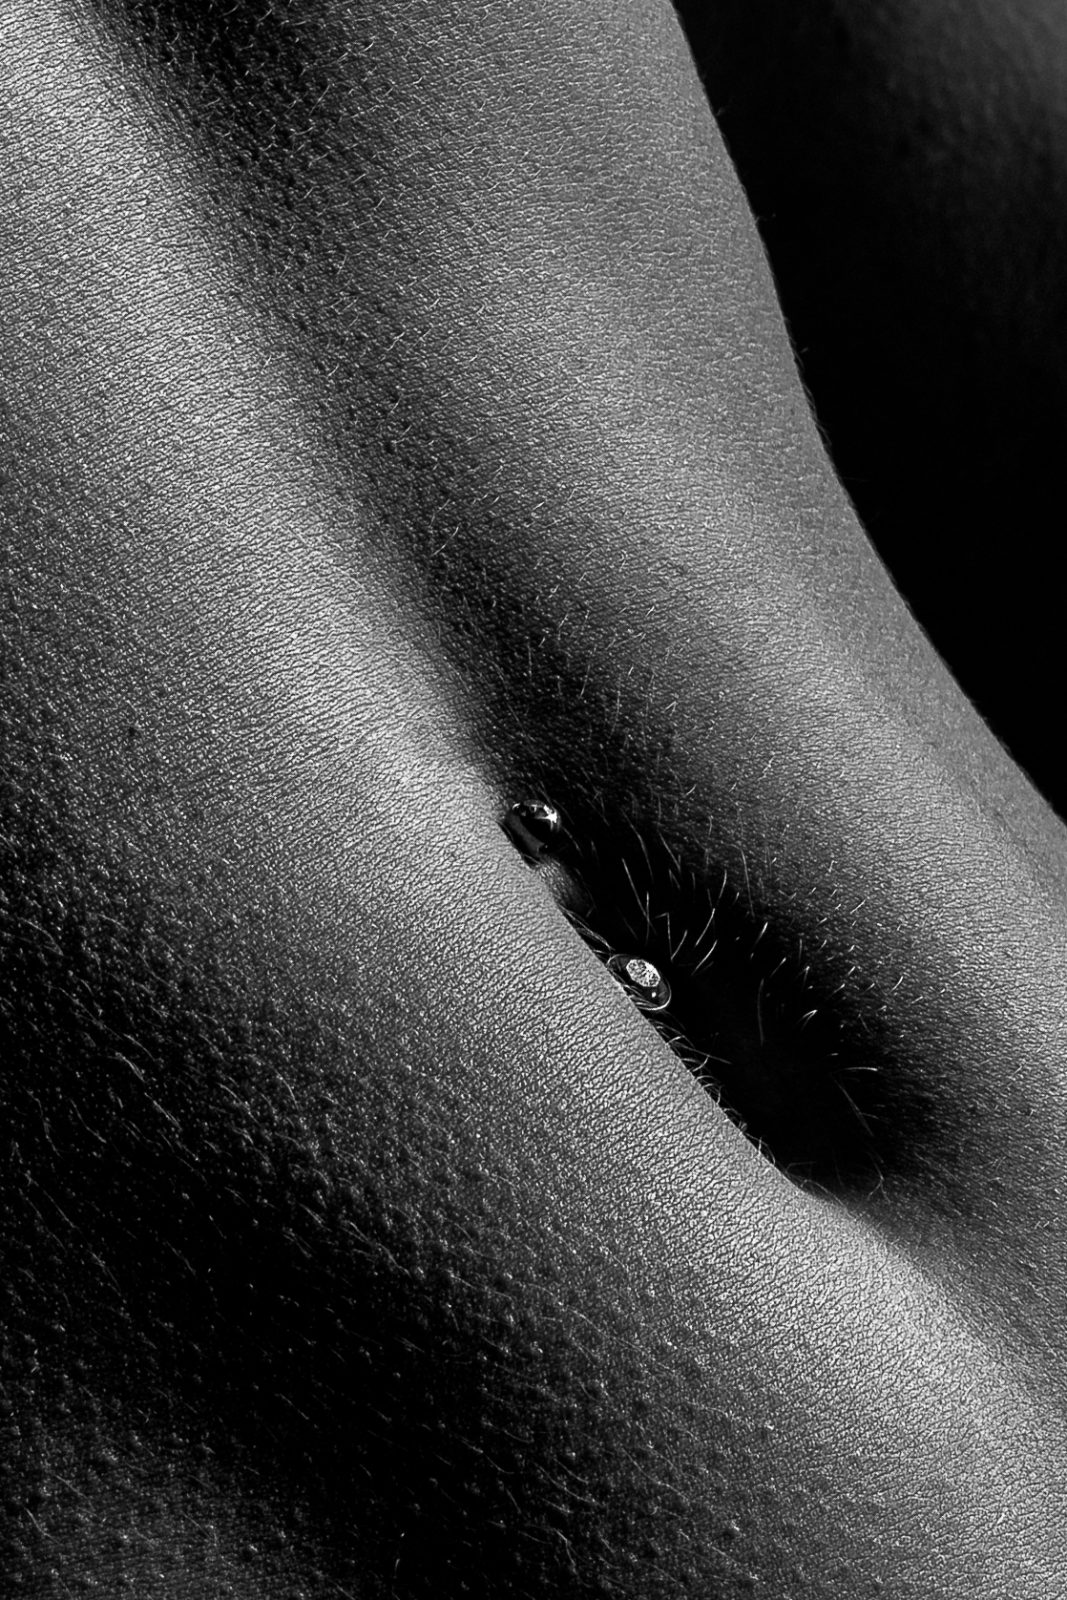 Portfolio Artisitc Nude / Bodyscapes